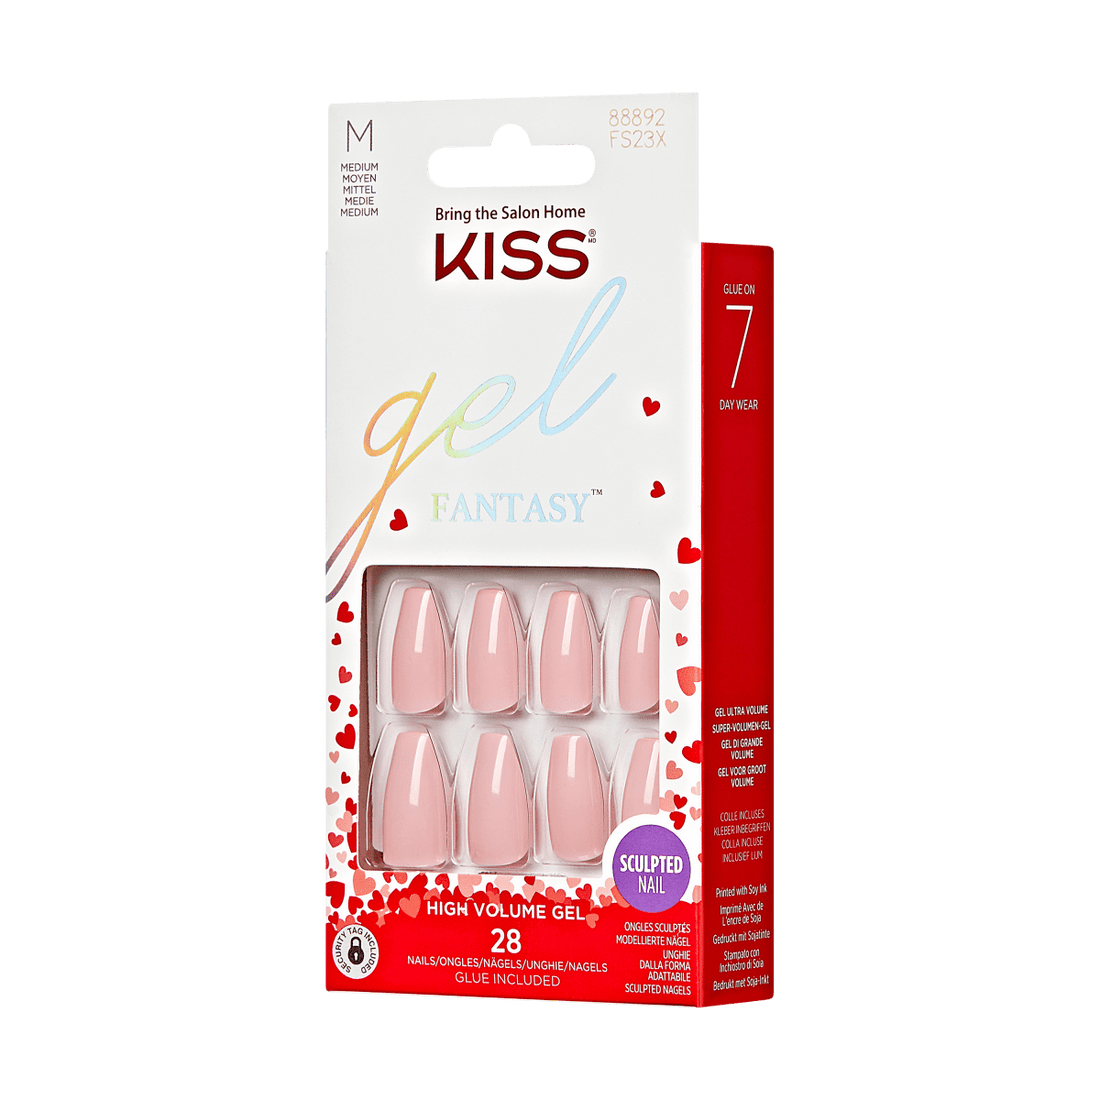 KISS Gel Fantasy, Press-On Nails, XOXO, Pink, Med Coffin, 28ct